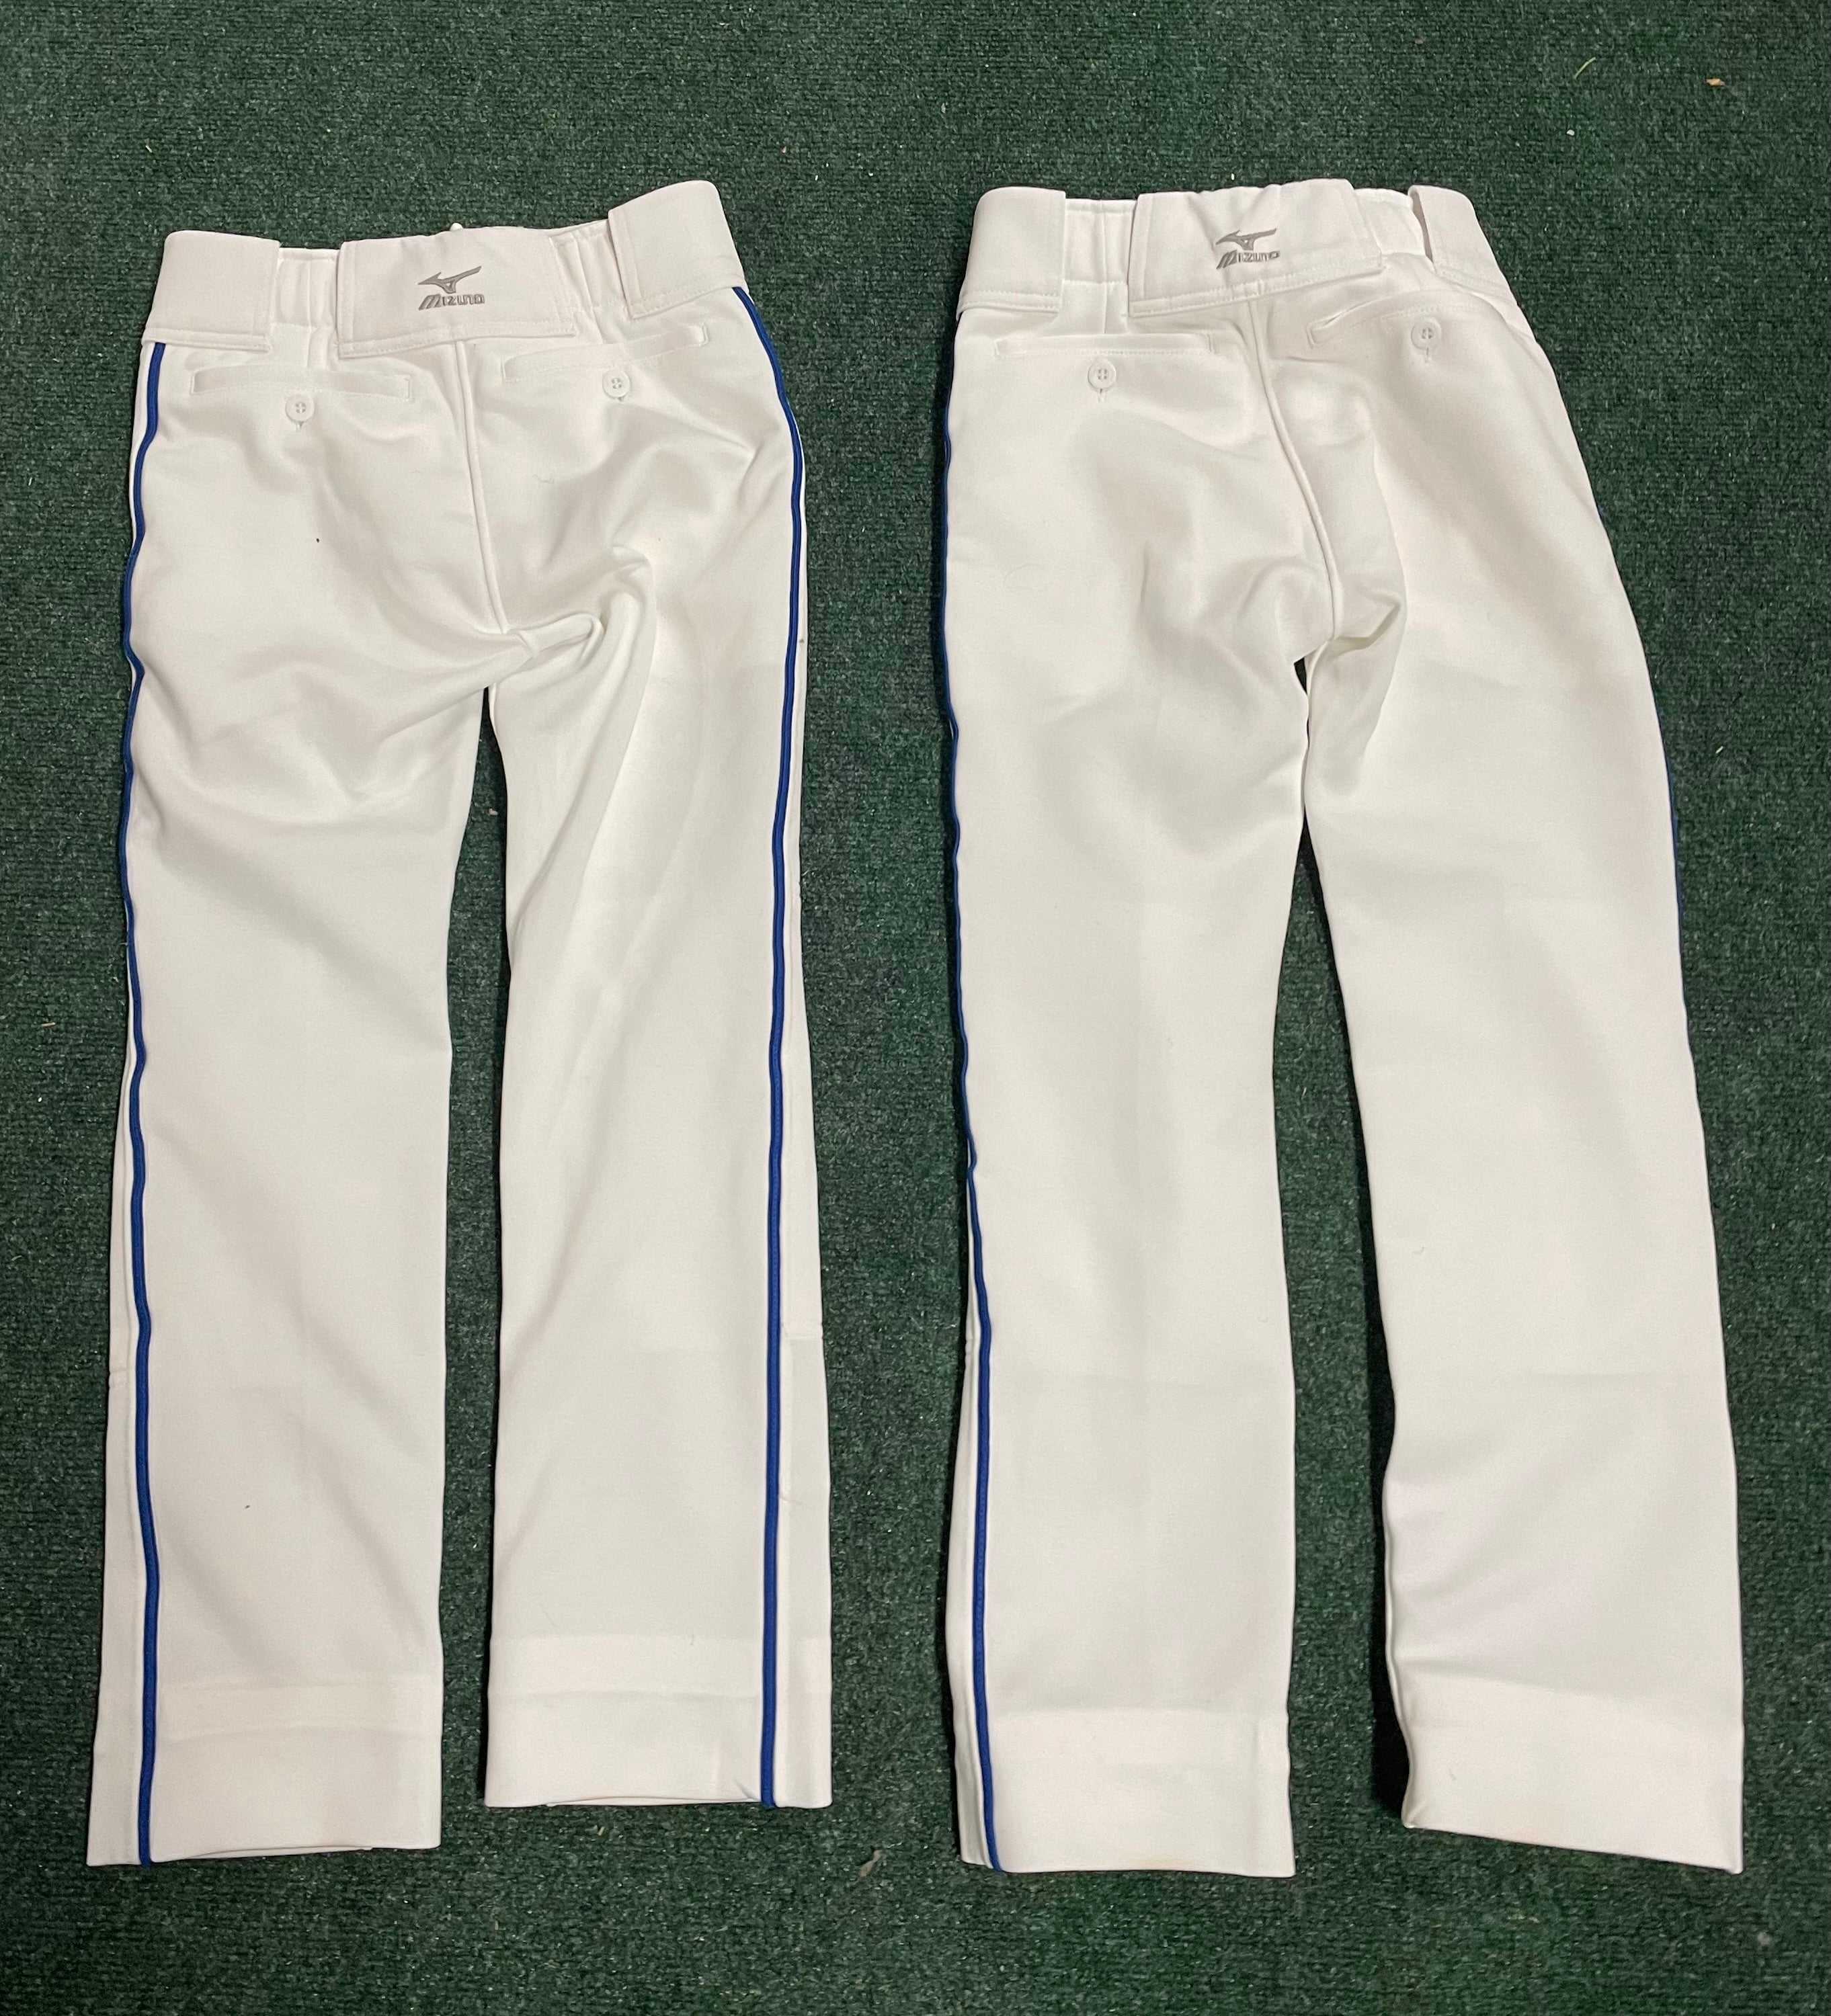 Rogers Travel Baseball Pants (White with Royal Piping)